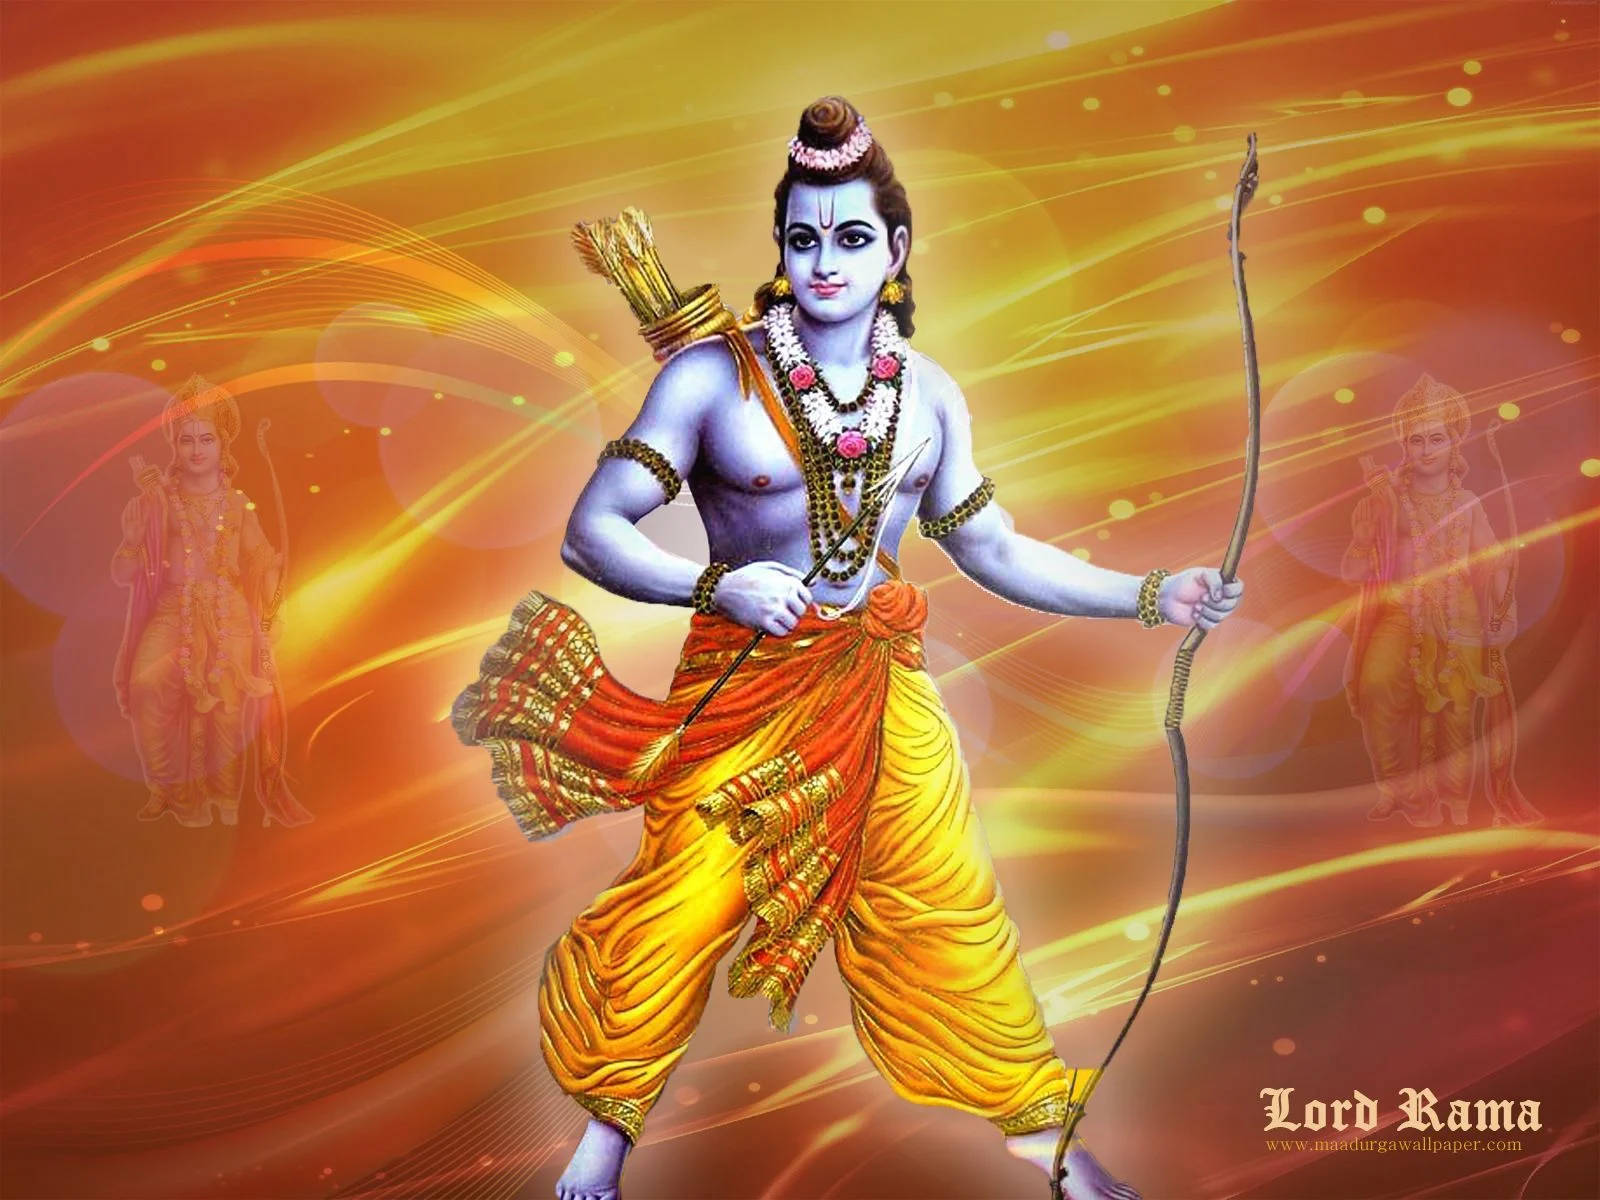 Hindu God Ram Ji In Aesthetic Orange Background